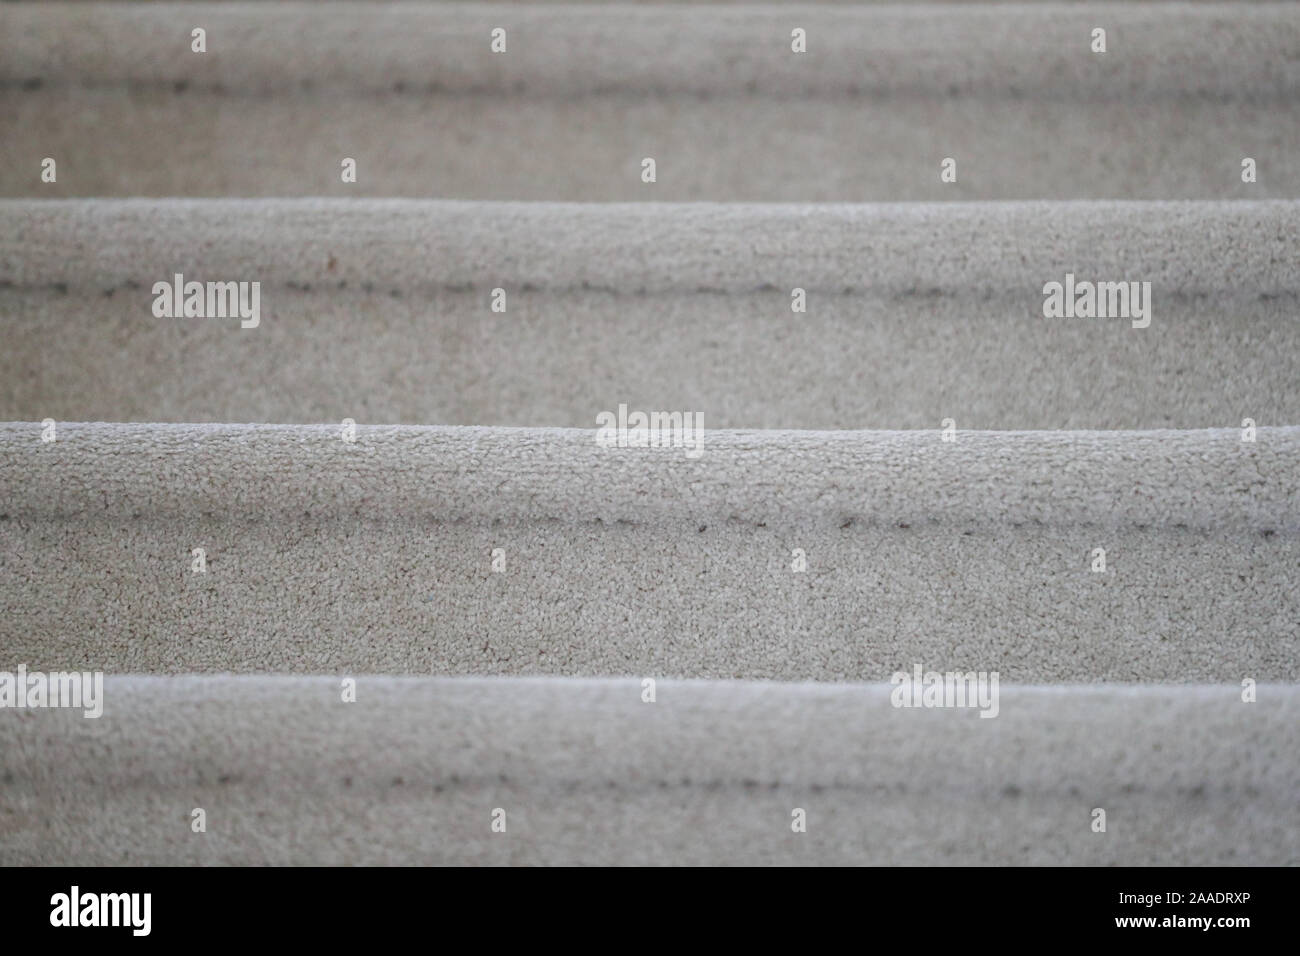 interior stairway close up- Image Stock Photo